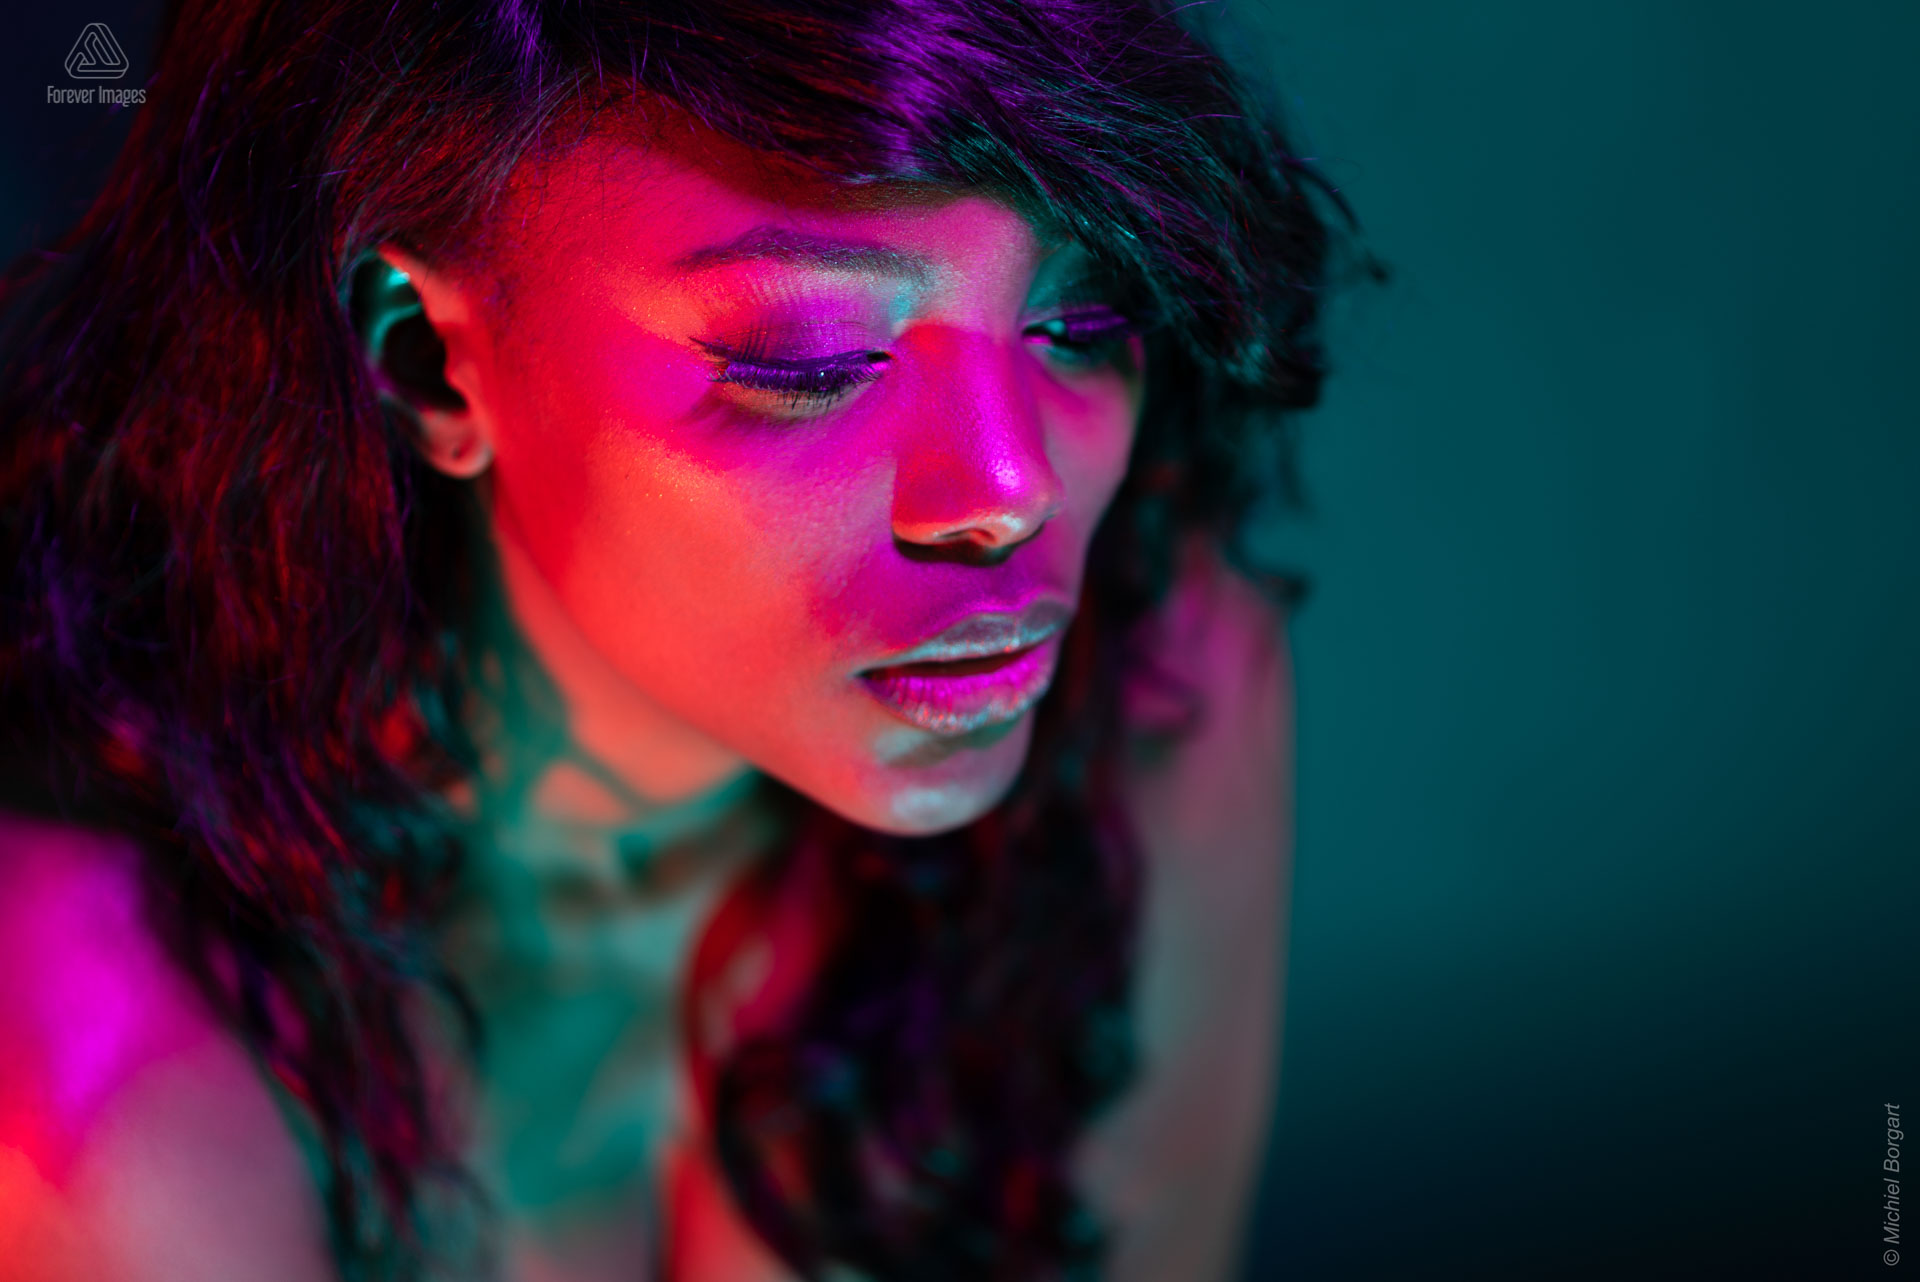 Portretfoto model paars rood groen licht boven beneden kijken low key | Mariana Pietersz Miss Avantgarde | Portretfotograaf Michiel Borgart - Forever Images.